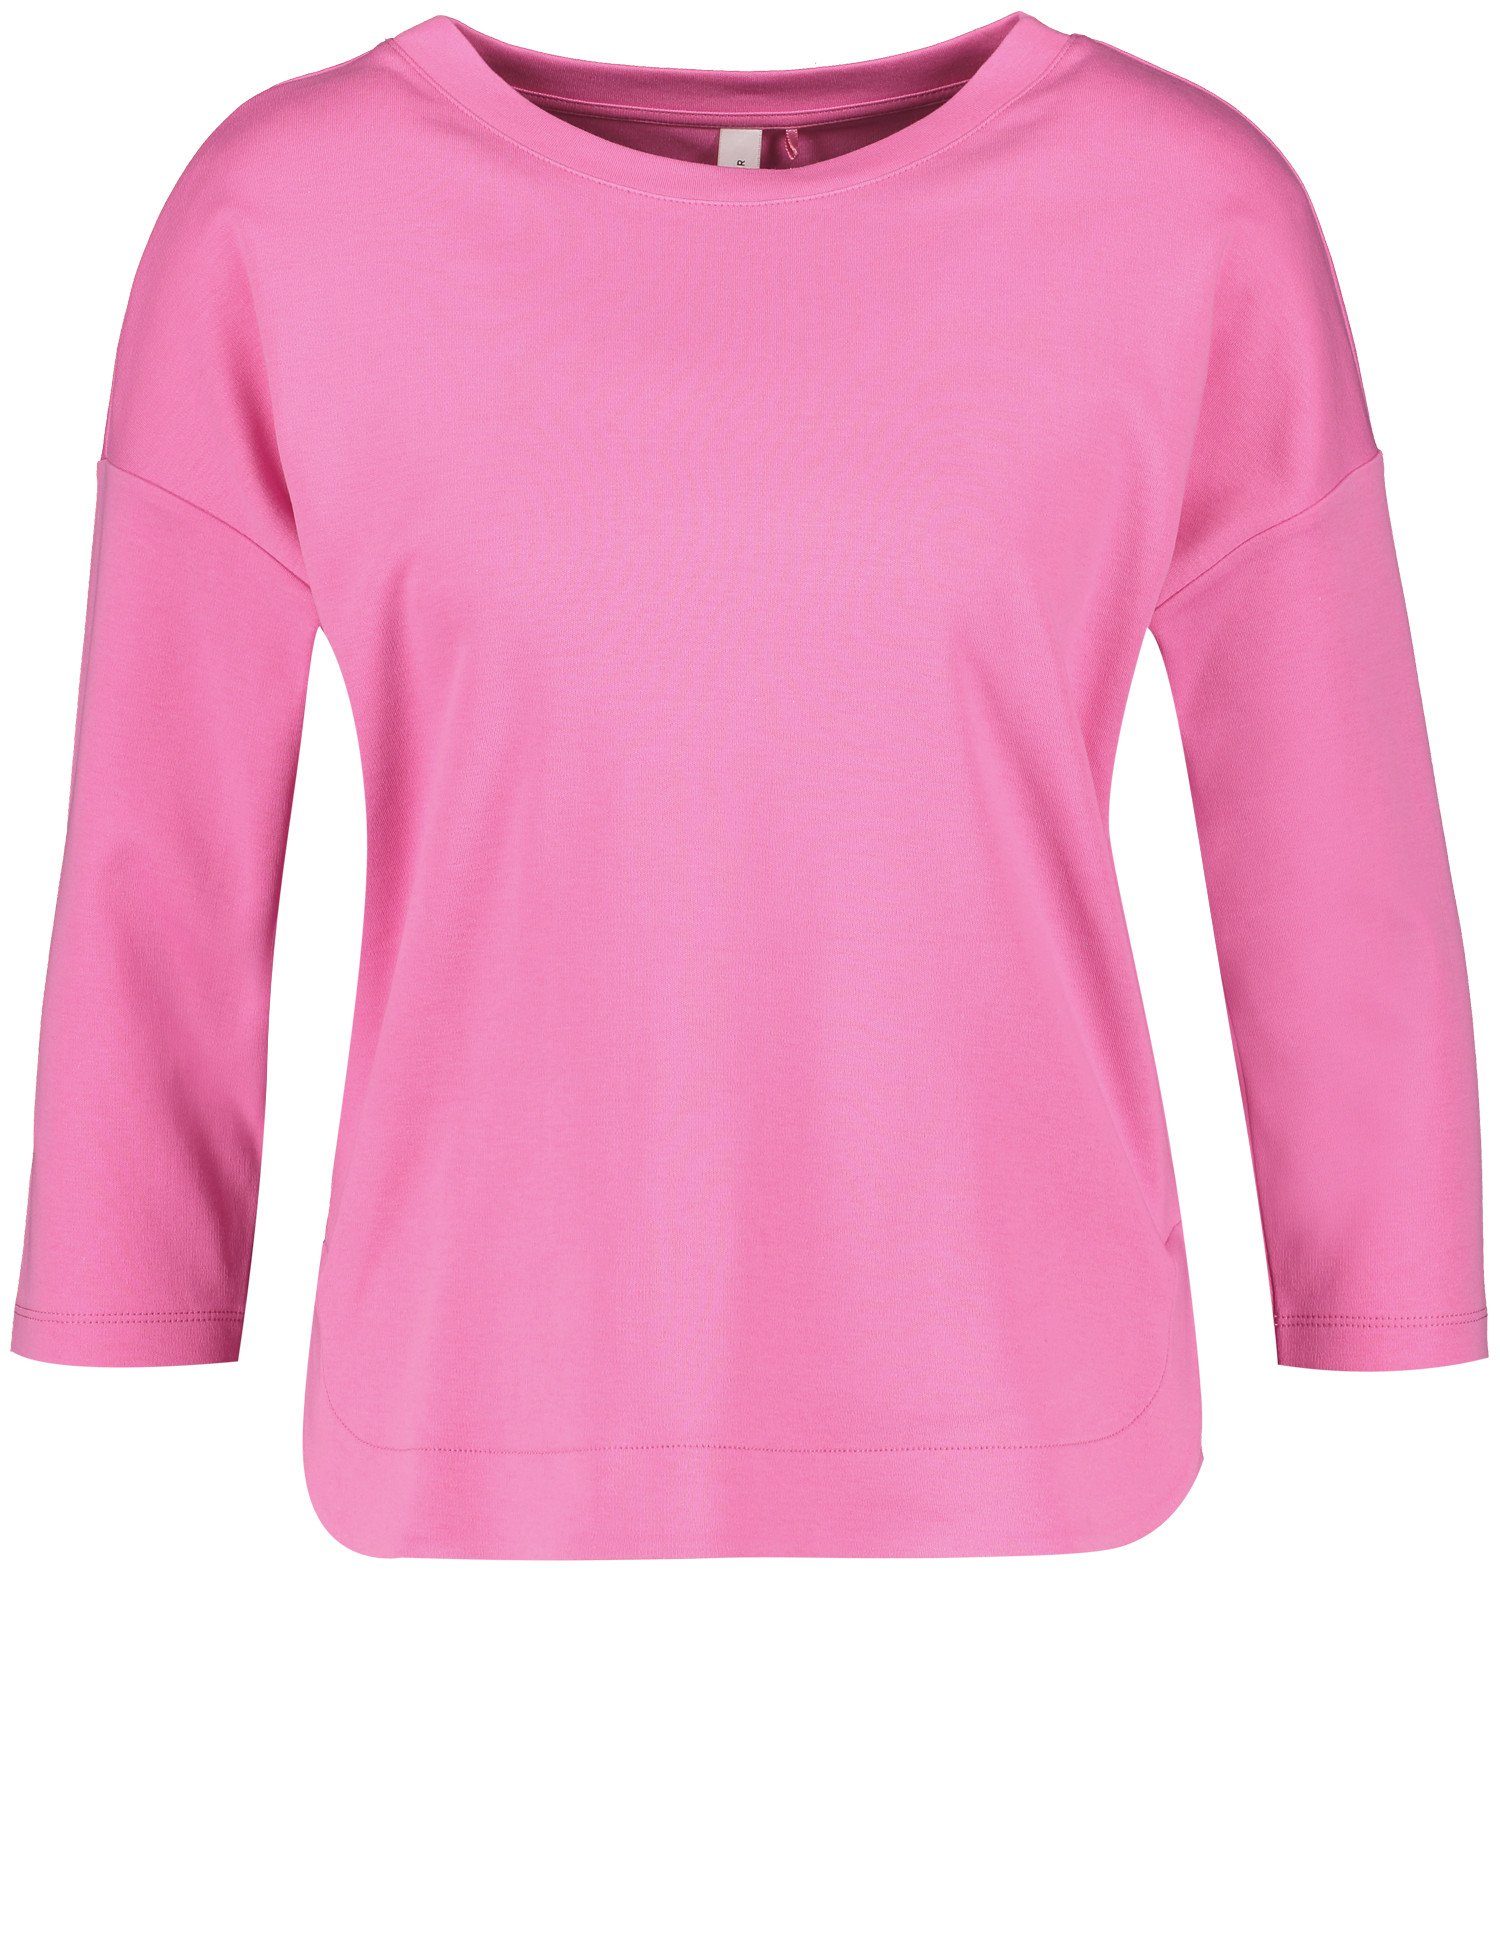 GERRY WEBER 3/4-Arm-Shirt Soft Pink aus Baumwolle 3/4-Arm-Shirt reiner